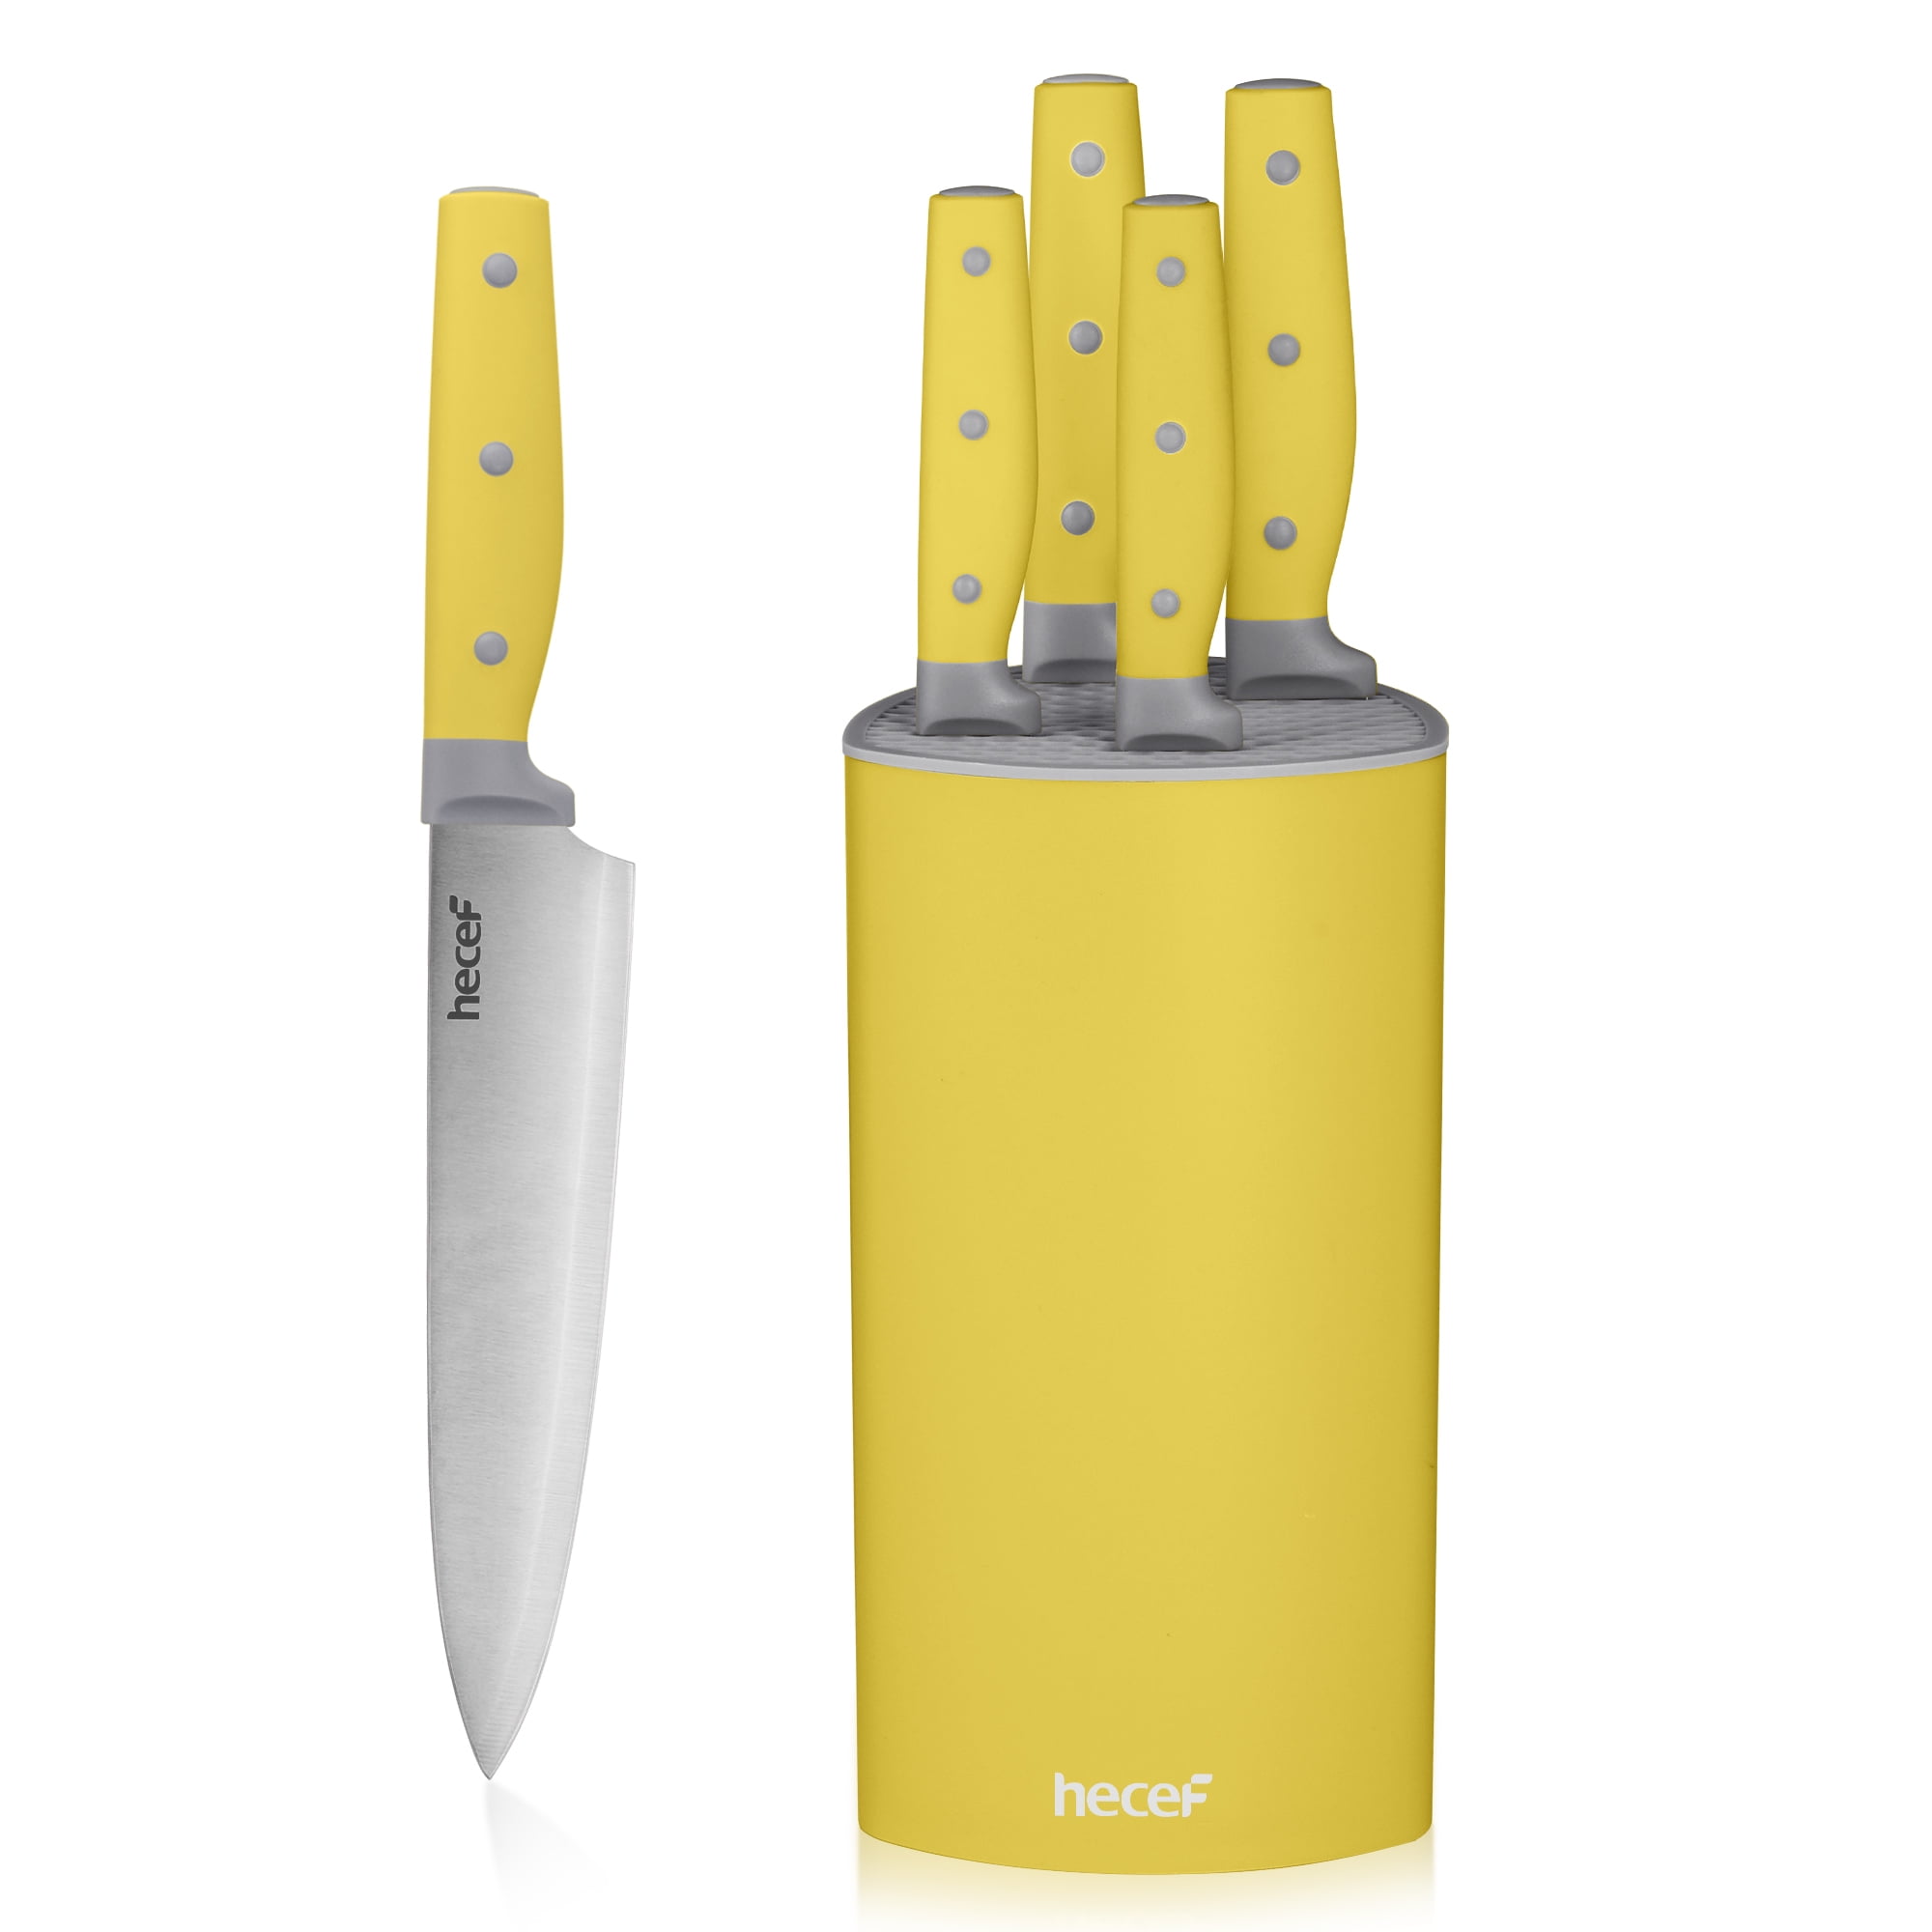 Hen & Rooster Kitchen Knives  Sets @ Atlantic Knife - FREE